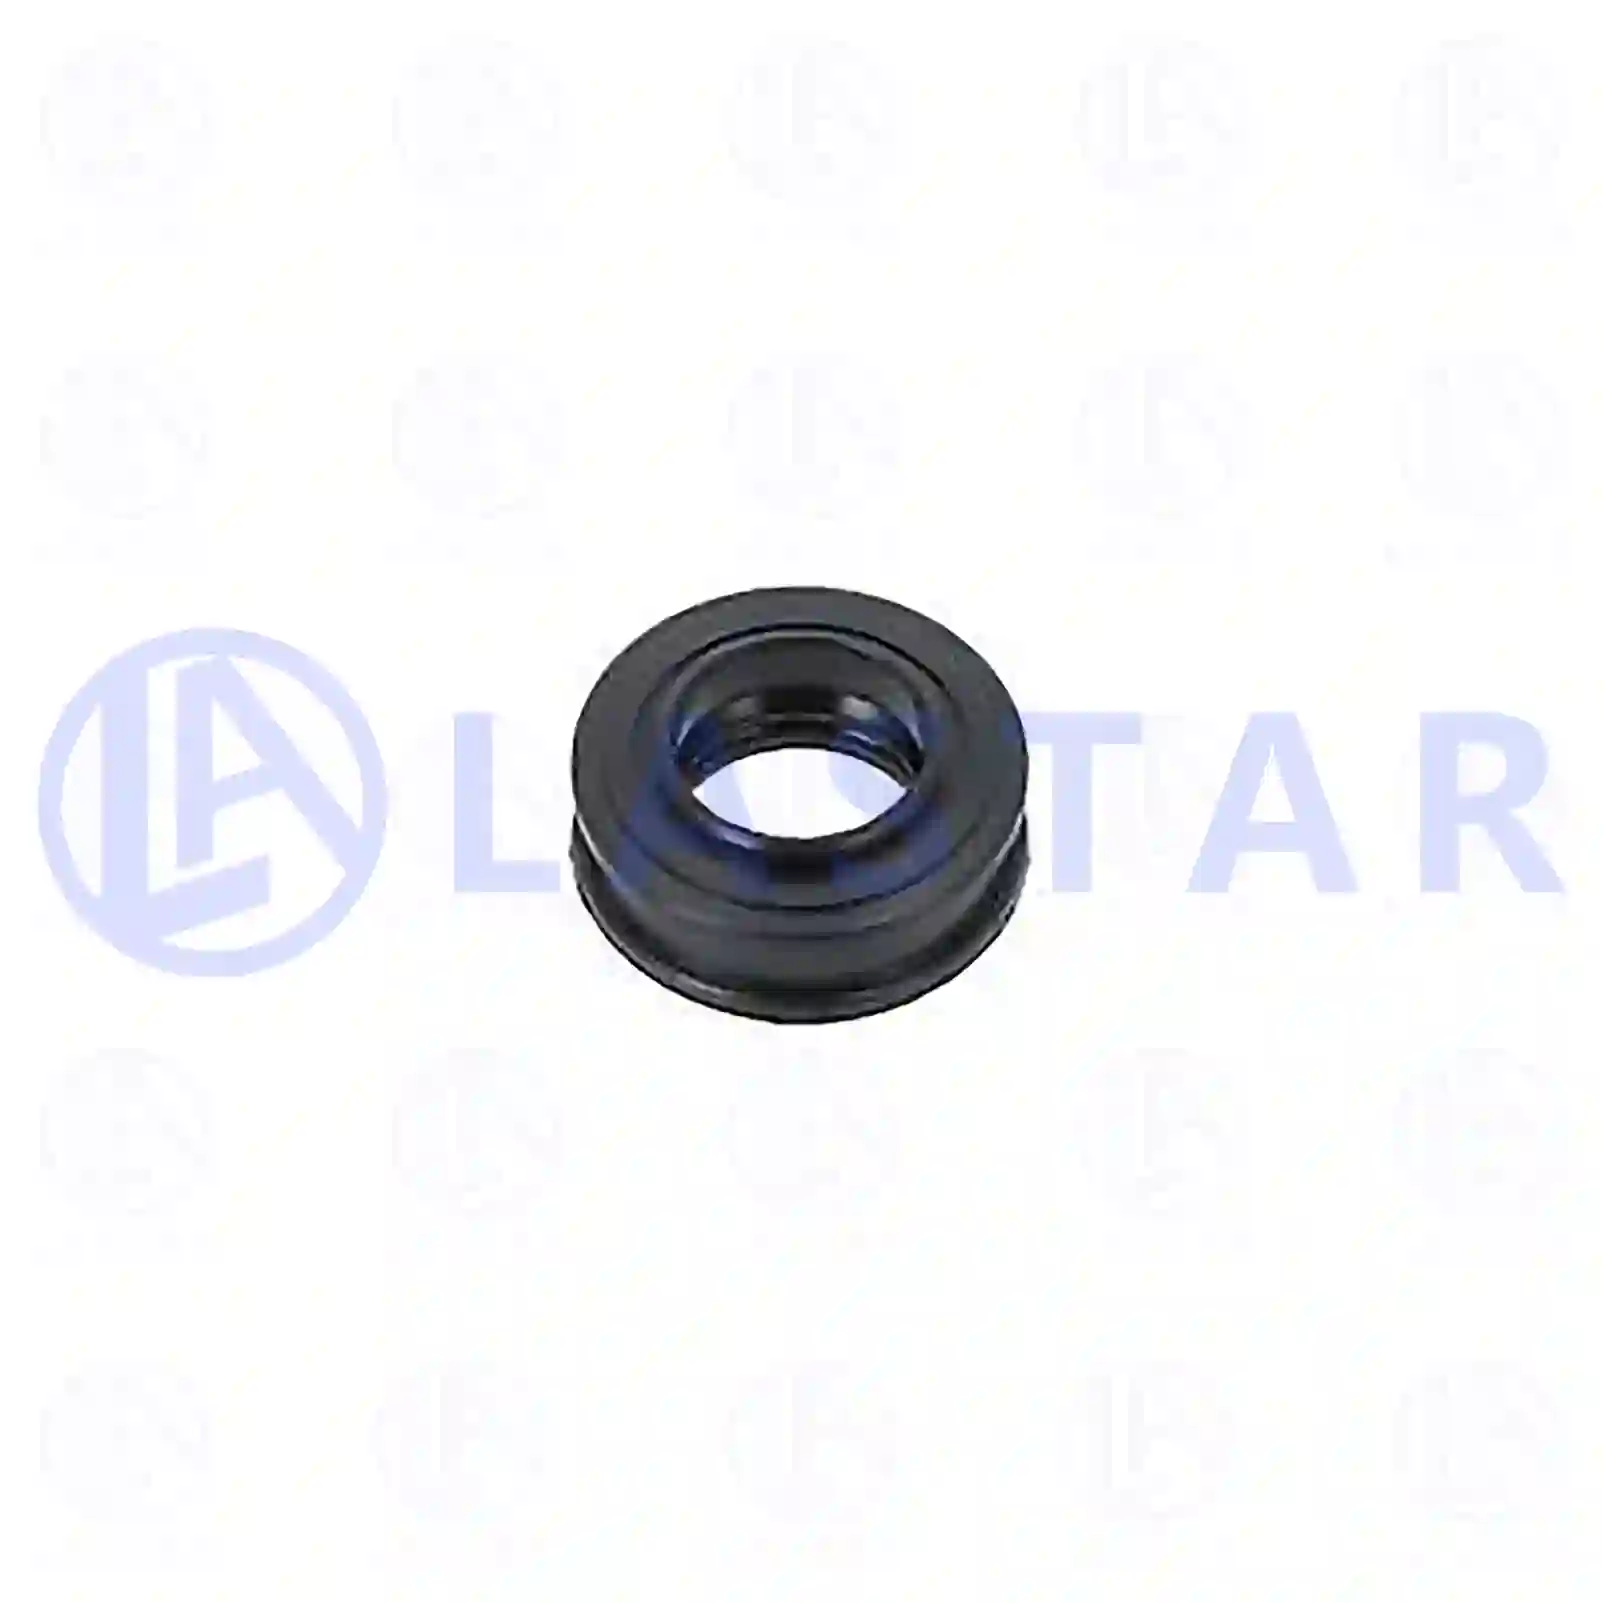  Cylinder Head Seal ring, la no: 77700847 ,  oem no:8192526 Lastar Spare Part | Truck Spare Parts, Auotomotive Spare Parts